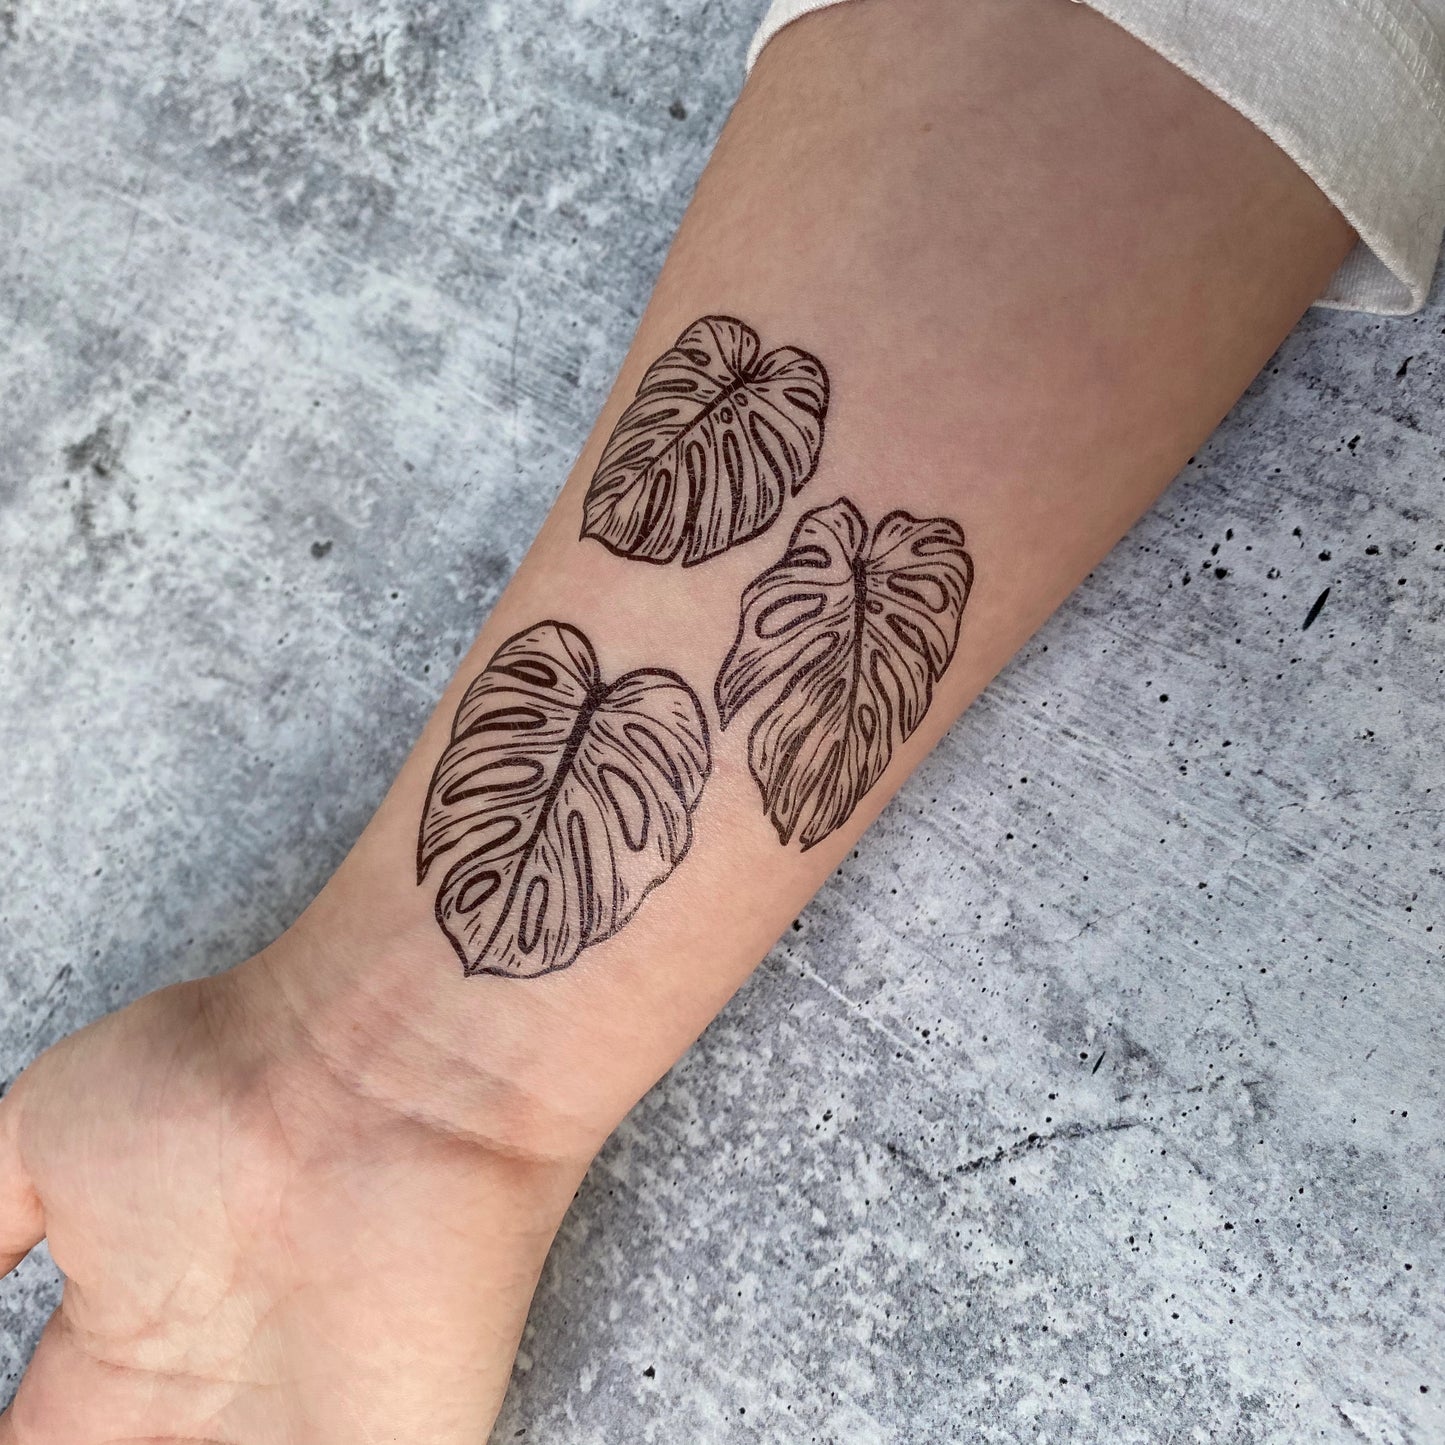 Final product, forearm leaves tattoo | Leaf tattoos, Tattoos, Hand tattoos